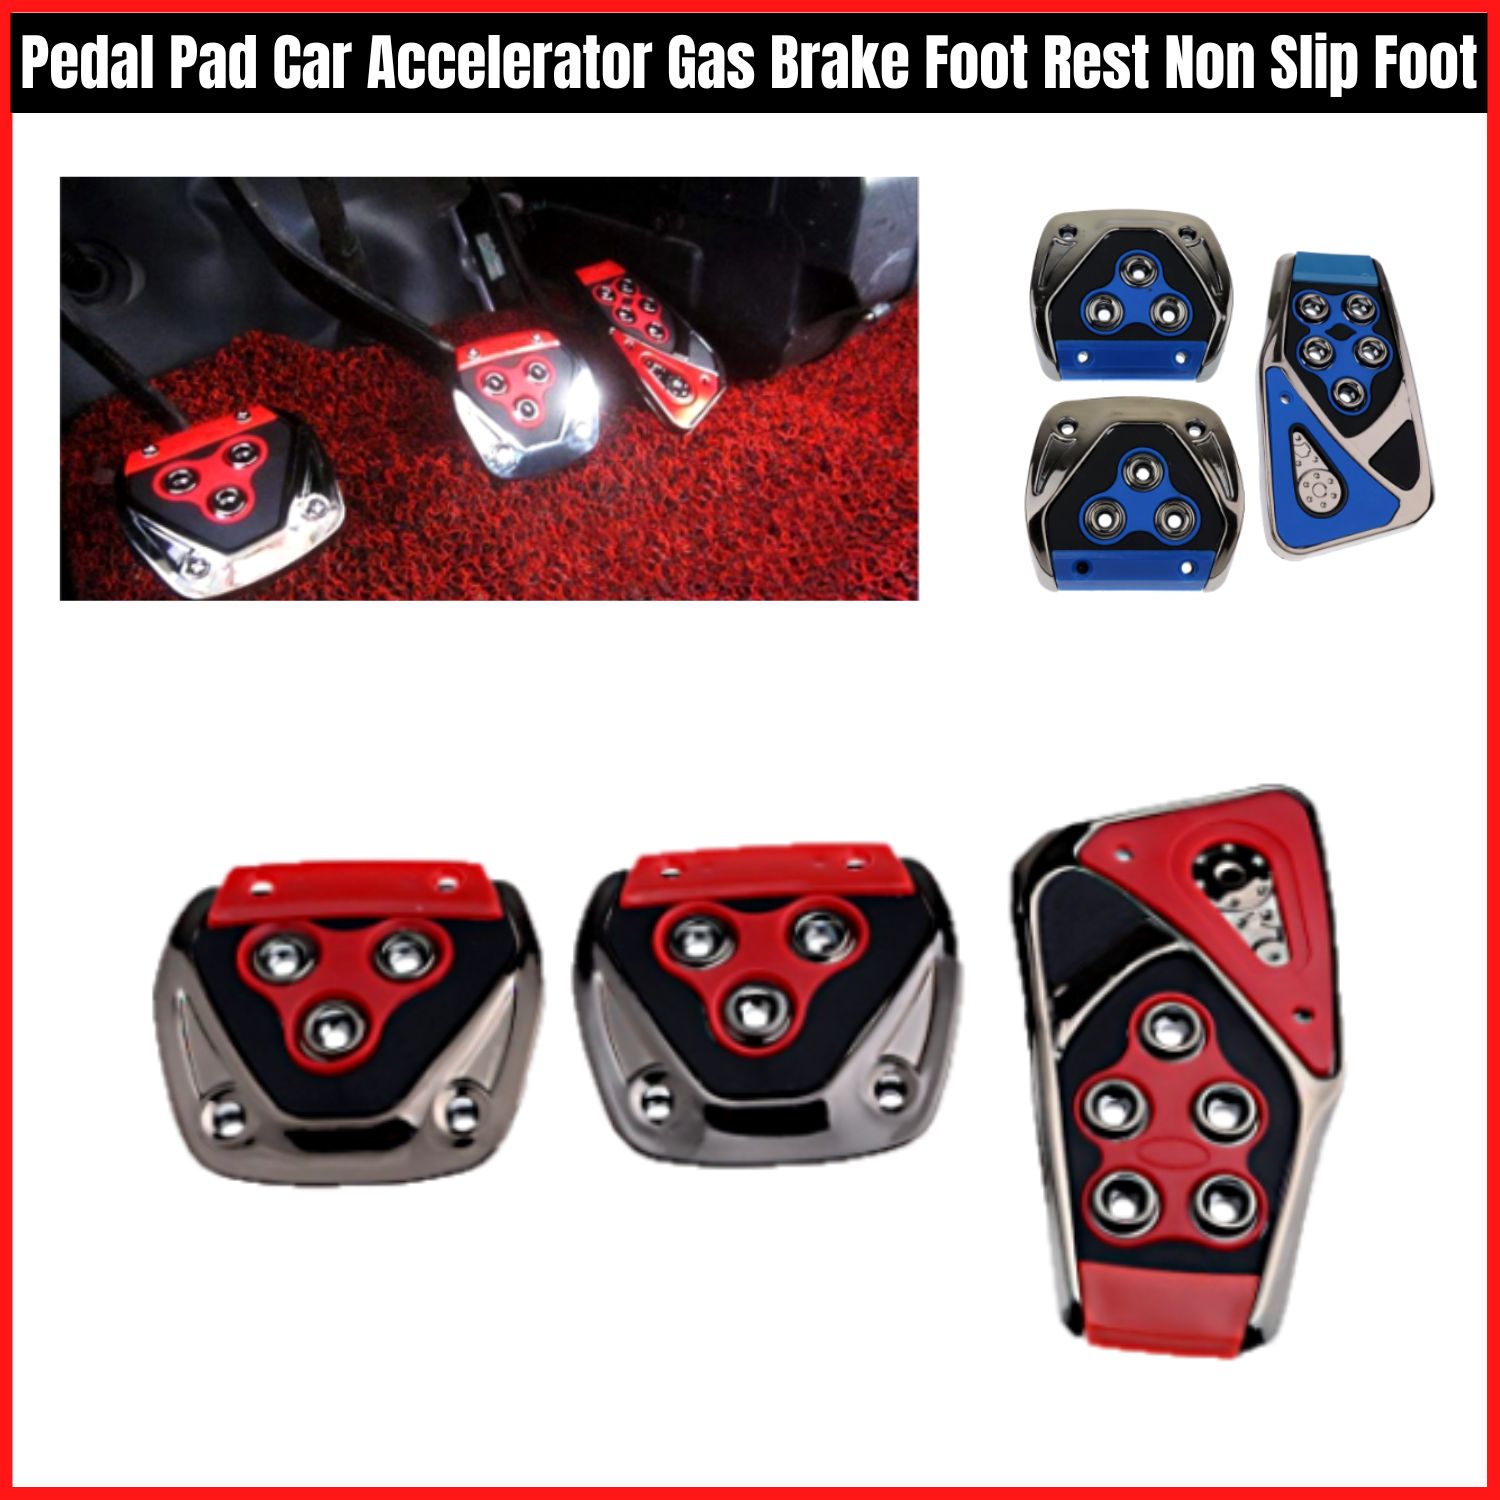 Pedal Pads - Car Pedal Pads